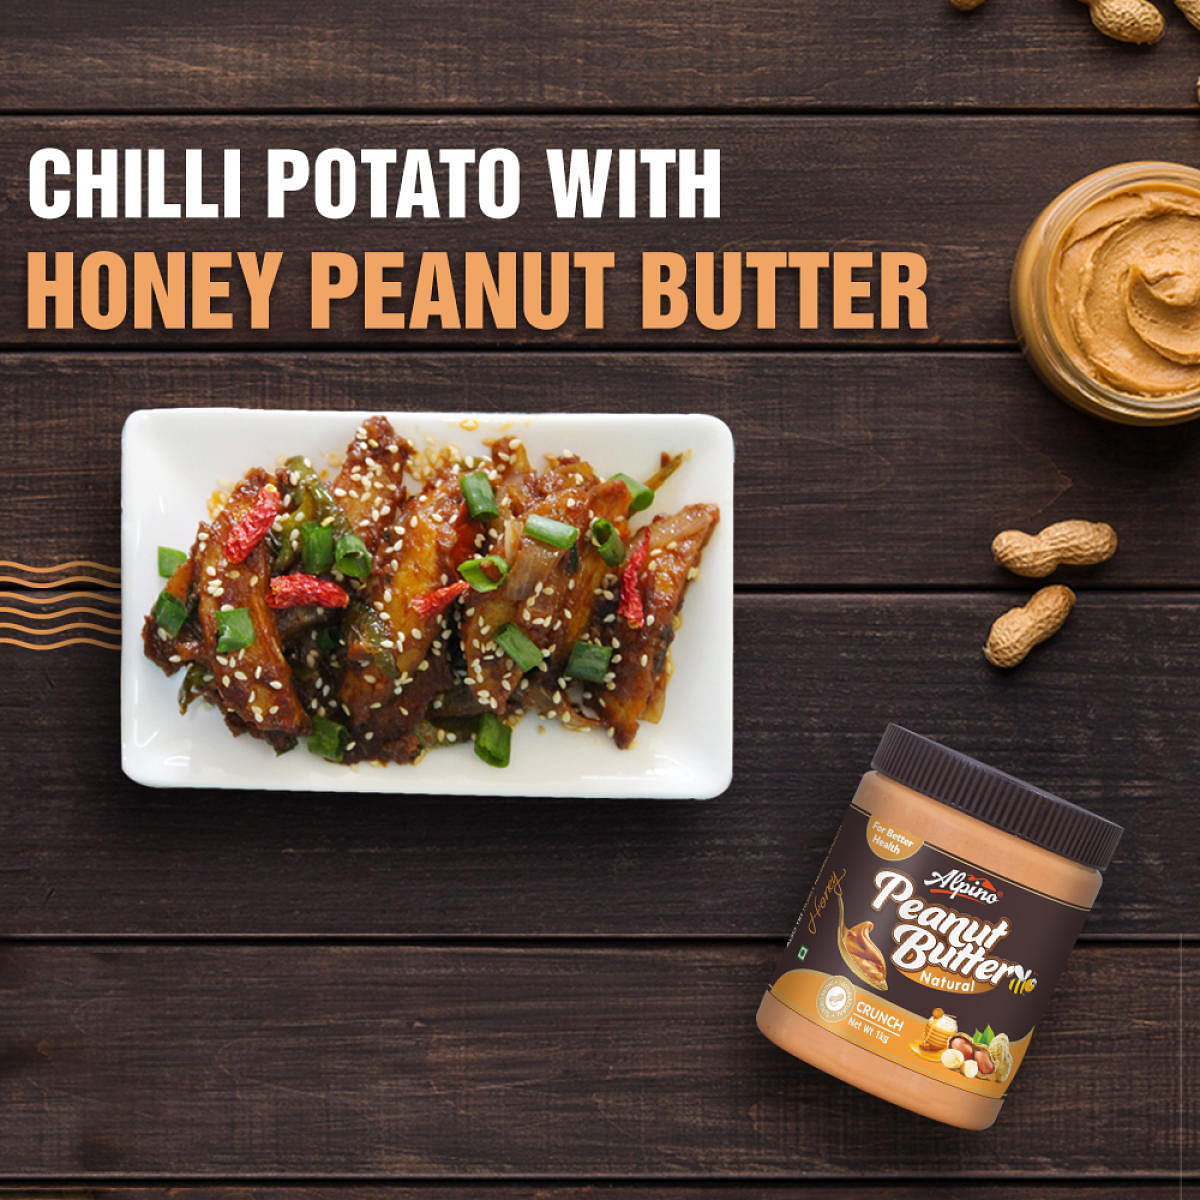 Chilli potato with honey peanut butter